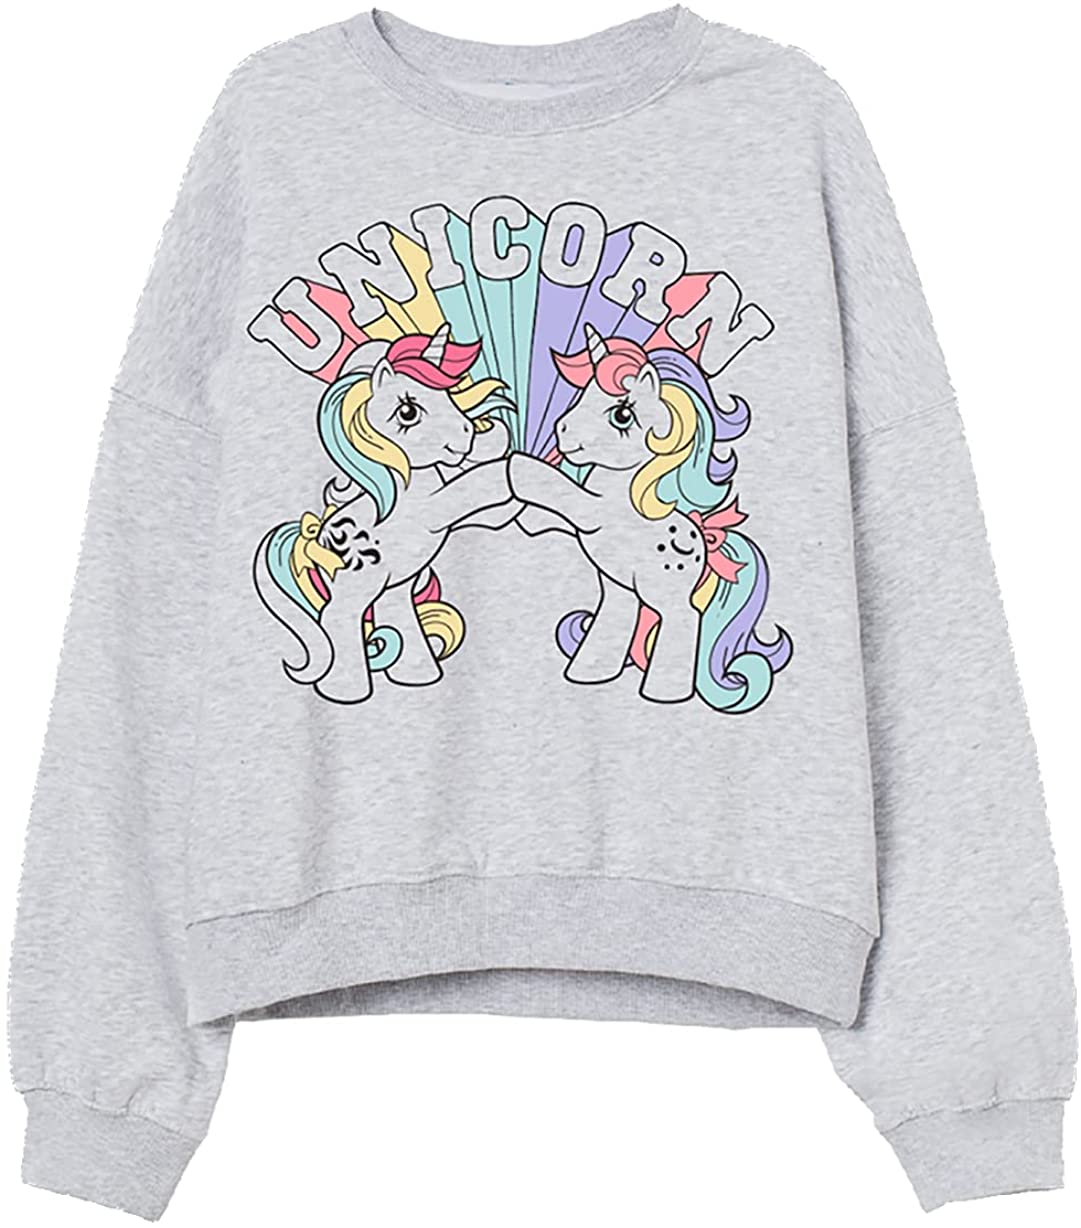 My Little Pony Women's Sweatshirt Fleece Brushed Jumper